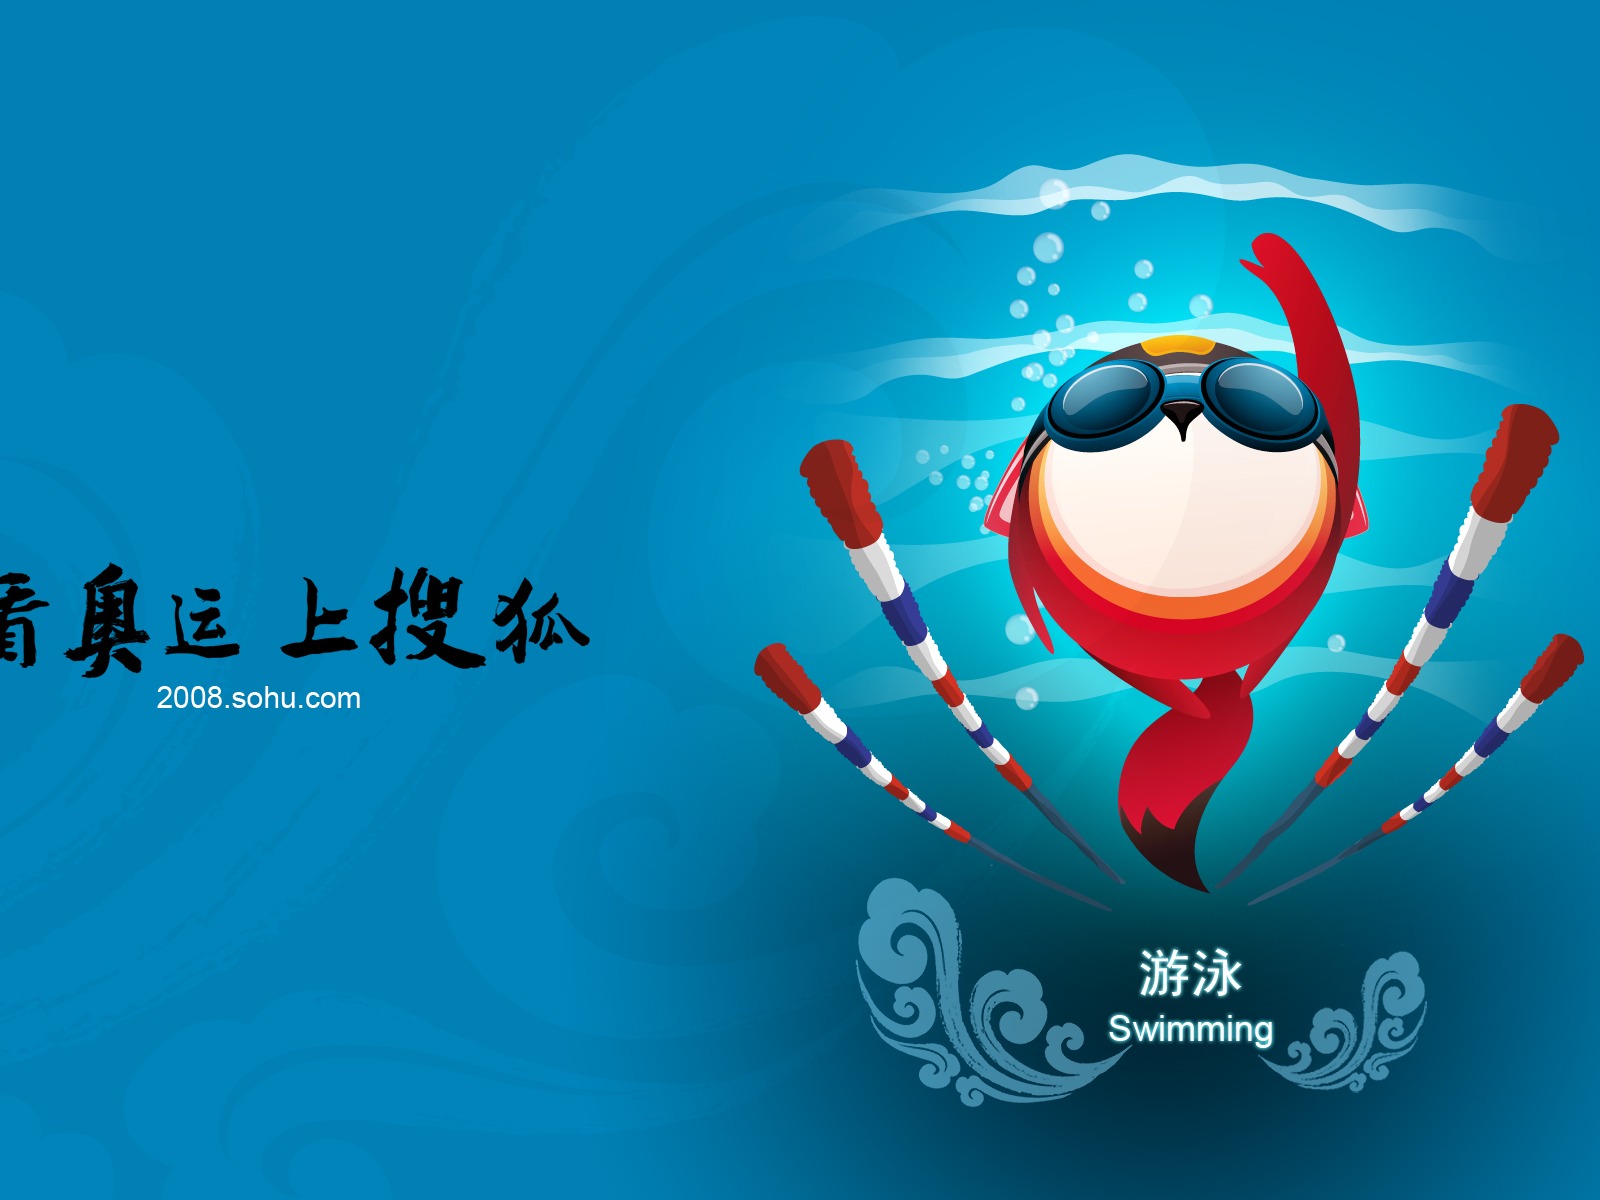 Sohu Olympic sports style wallpaper #26 - 1600x1200